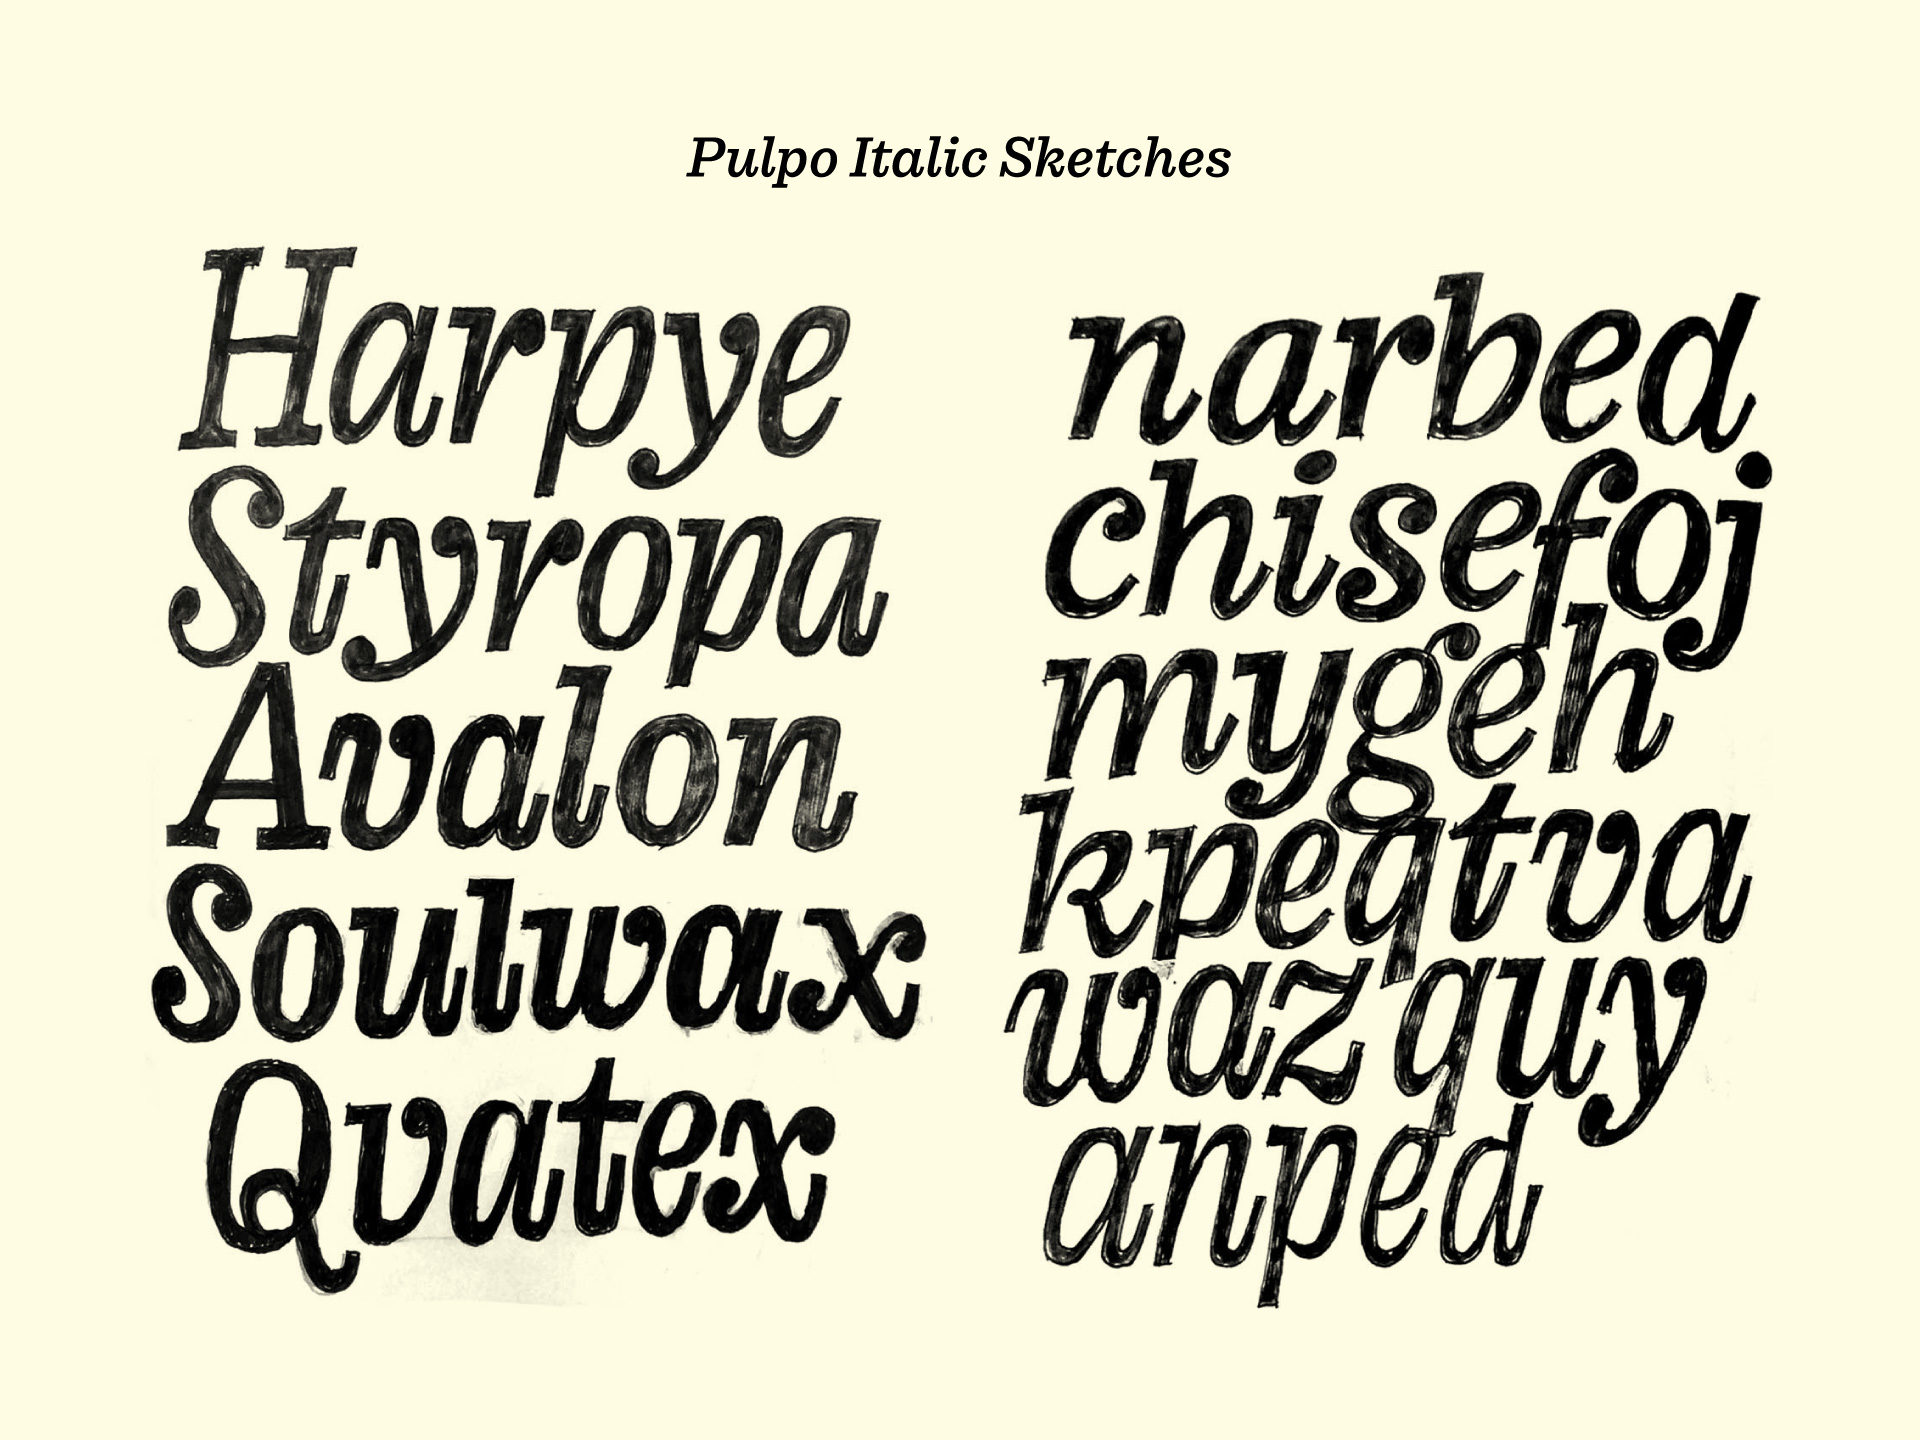 Pulpo Typeface (10)